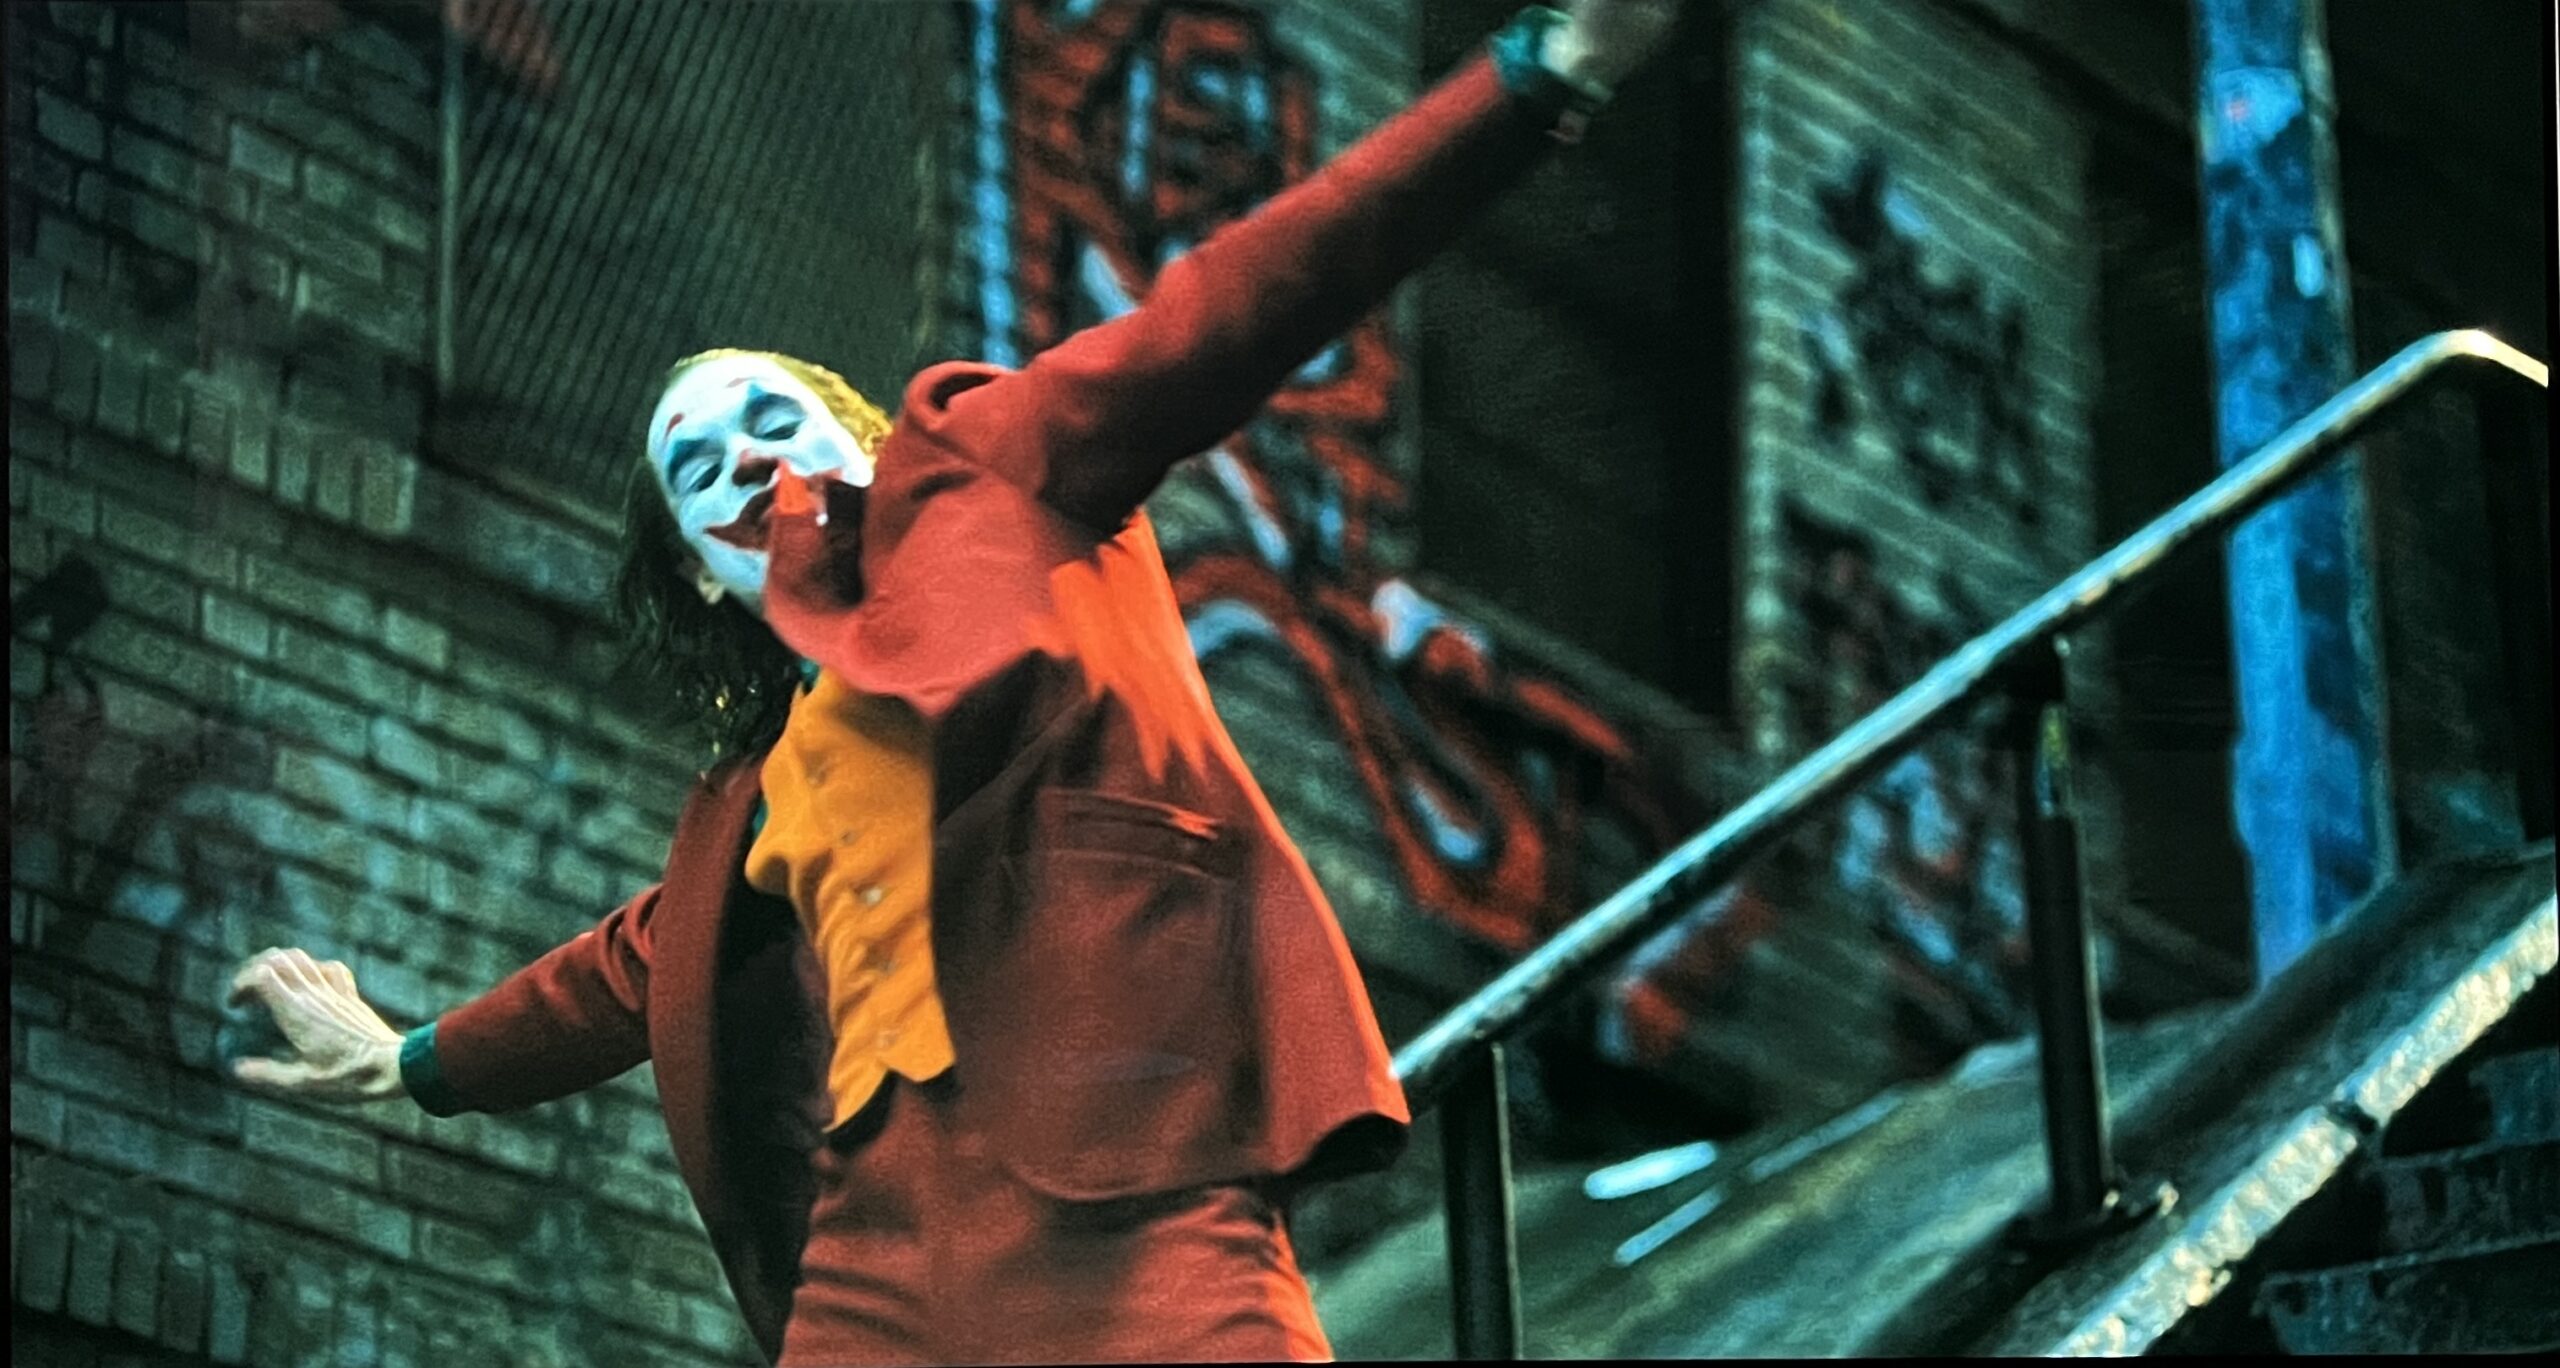 Kadr z filmu "Joker" po kalibracji 